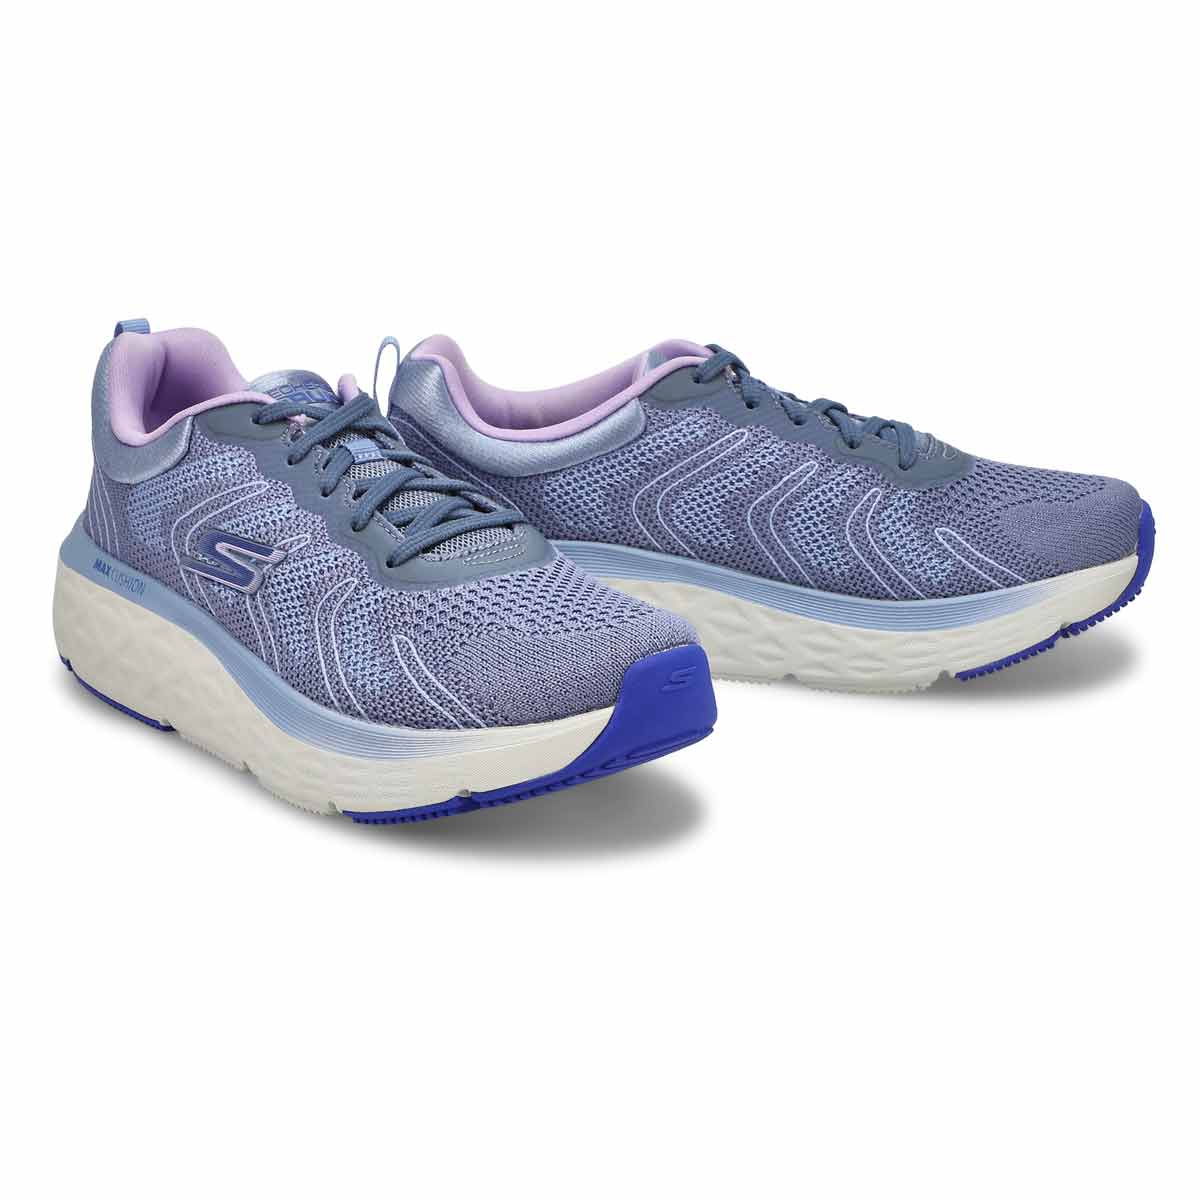 Women's Max Cushion Delta Running Shoe - Blue